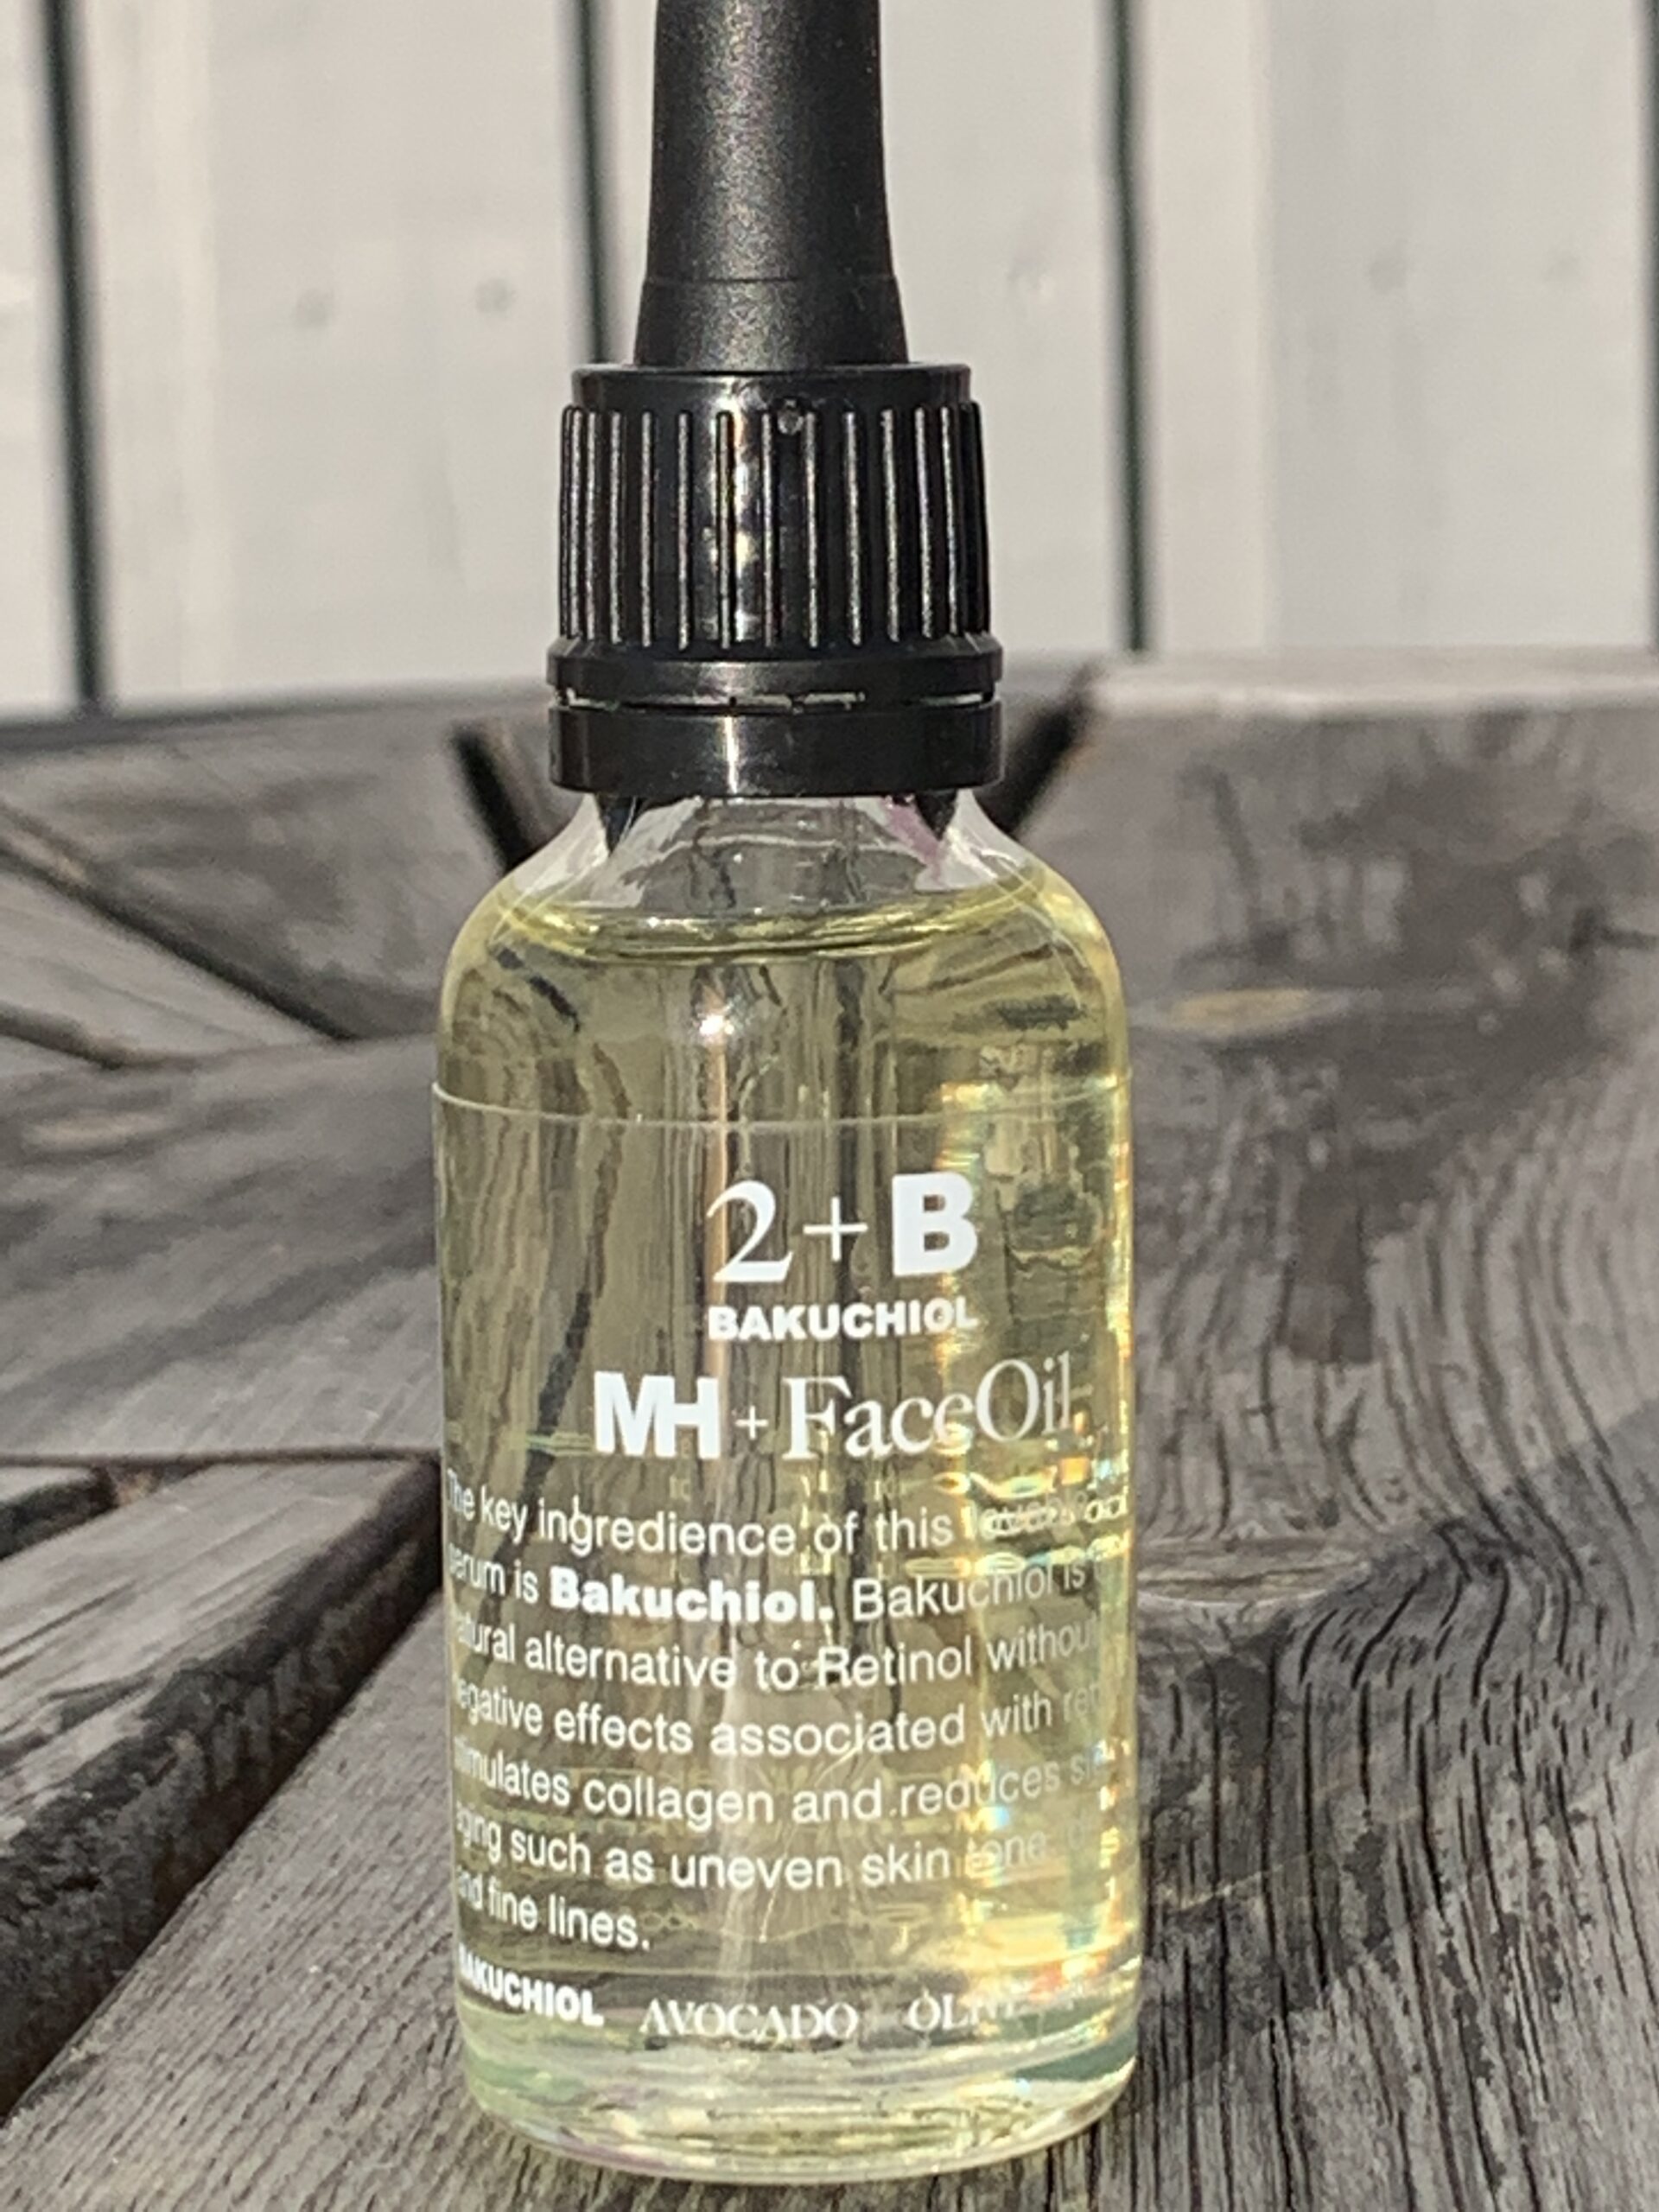 MH+ Face Oil 2+B